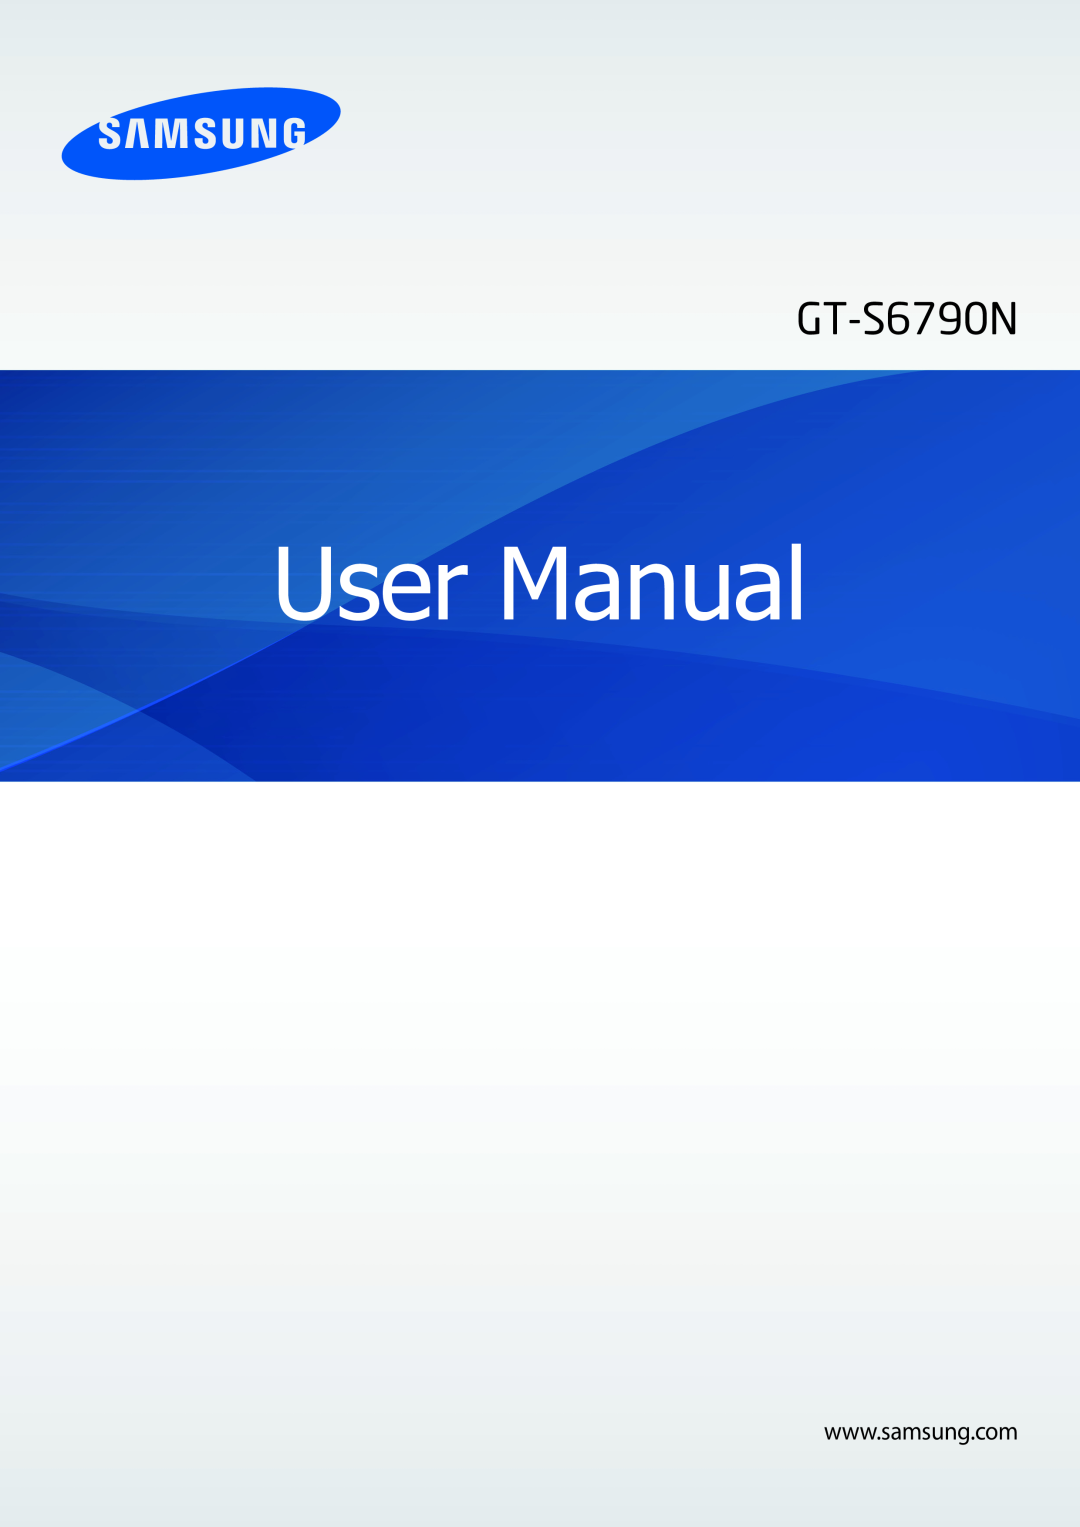 Samsung GT-S6790PWNTPH, GT-S6790ZWYSEB, GT-S6790MKNDBT, GT-S6790PWNDBT, GT-S6790PWNSEB manual User Manual, GT-S6790N 